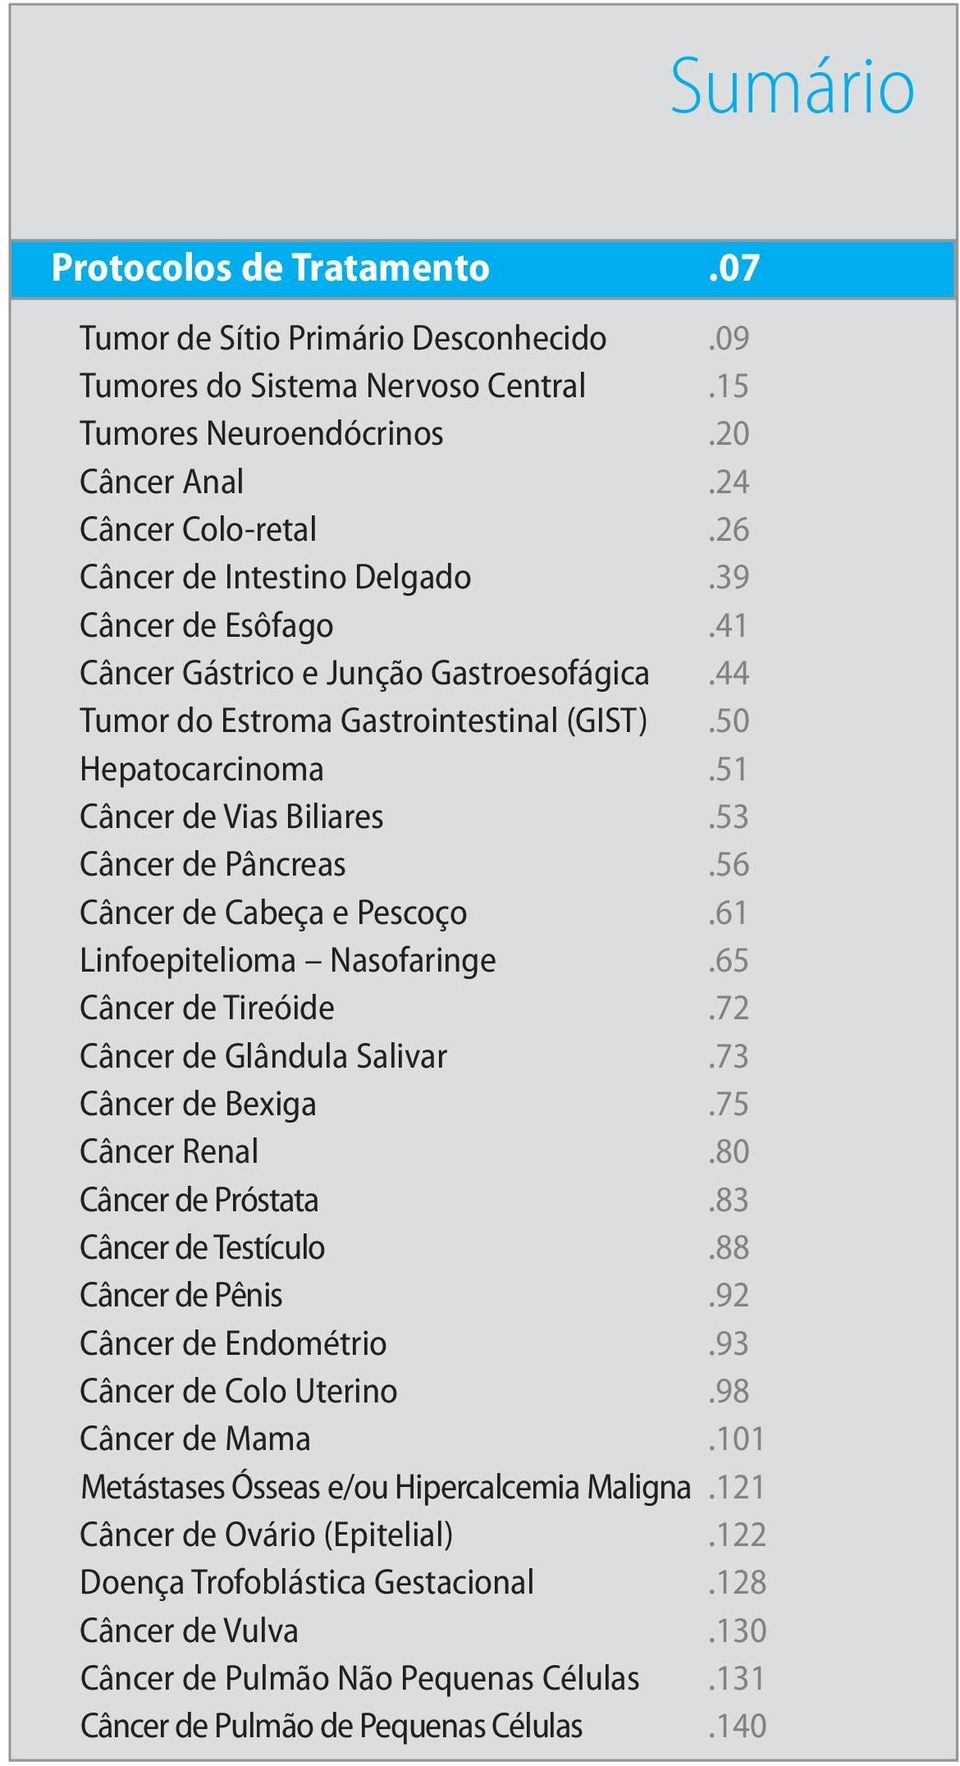 Nasofaringe Câncer de Tireóide Câncer de Glândula Salivar Câncer de Bexiga Câncer Renal Câncer de Próstata Câncer de Testículo Câncer de Pênis Câncer de Endométrio Câncer de Colo Uterino Câncer de